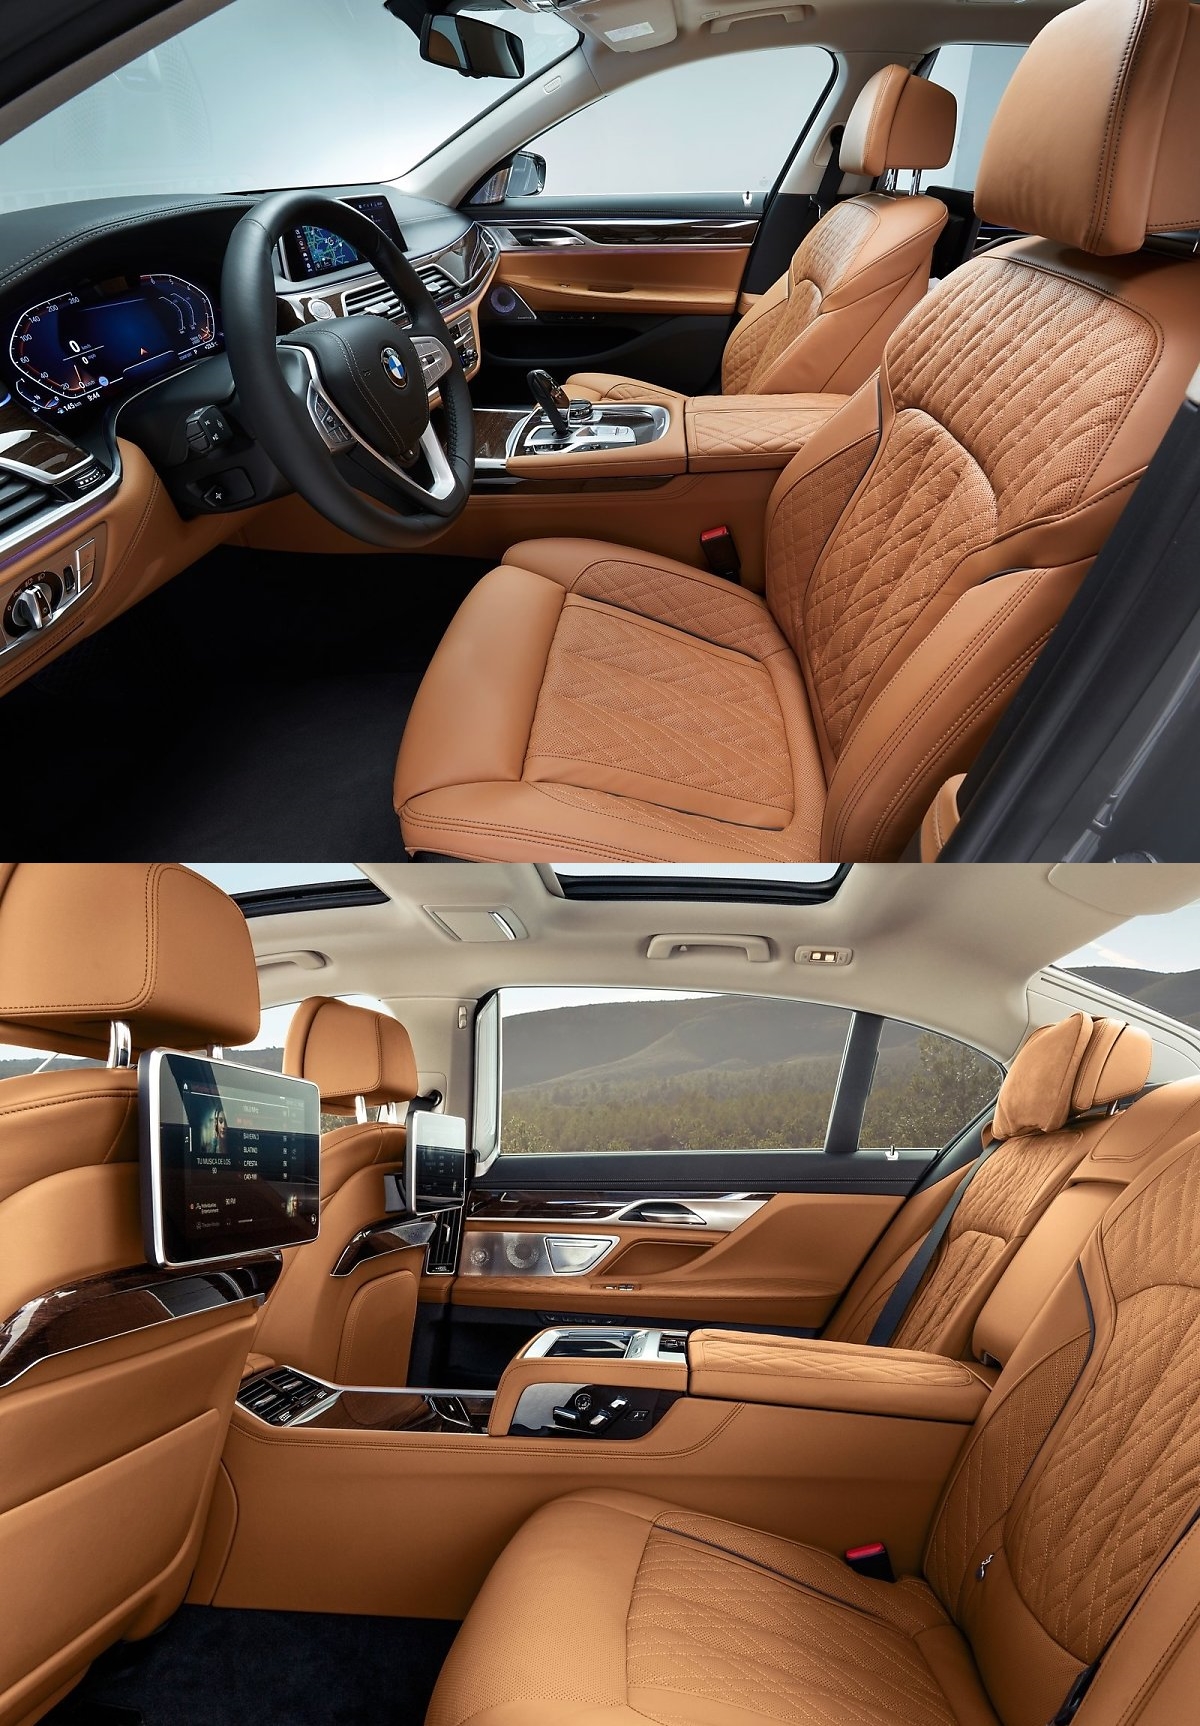 'BMW 7시리즈'의 차량 내부 사진. IT 기술을 활용한 편의 장비가 많고 S-클래스에 비해 더 스포티한 디자인을 자랑한다.